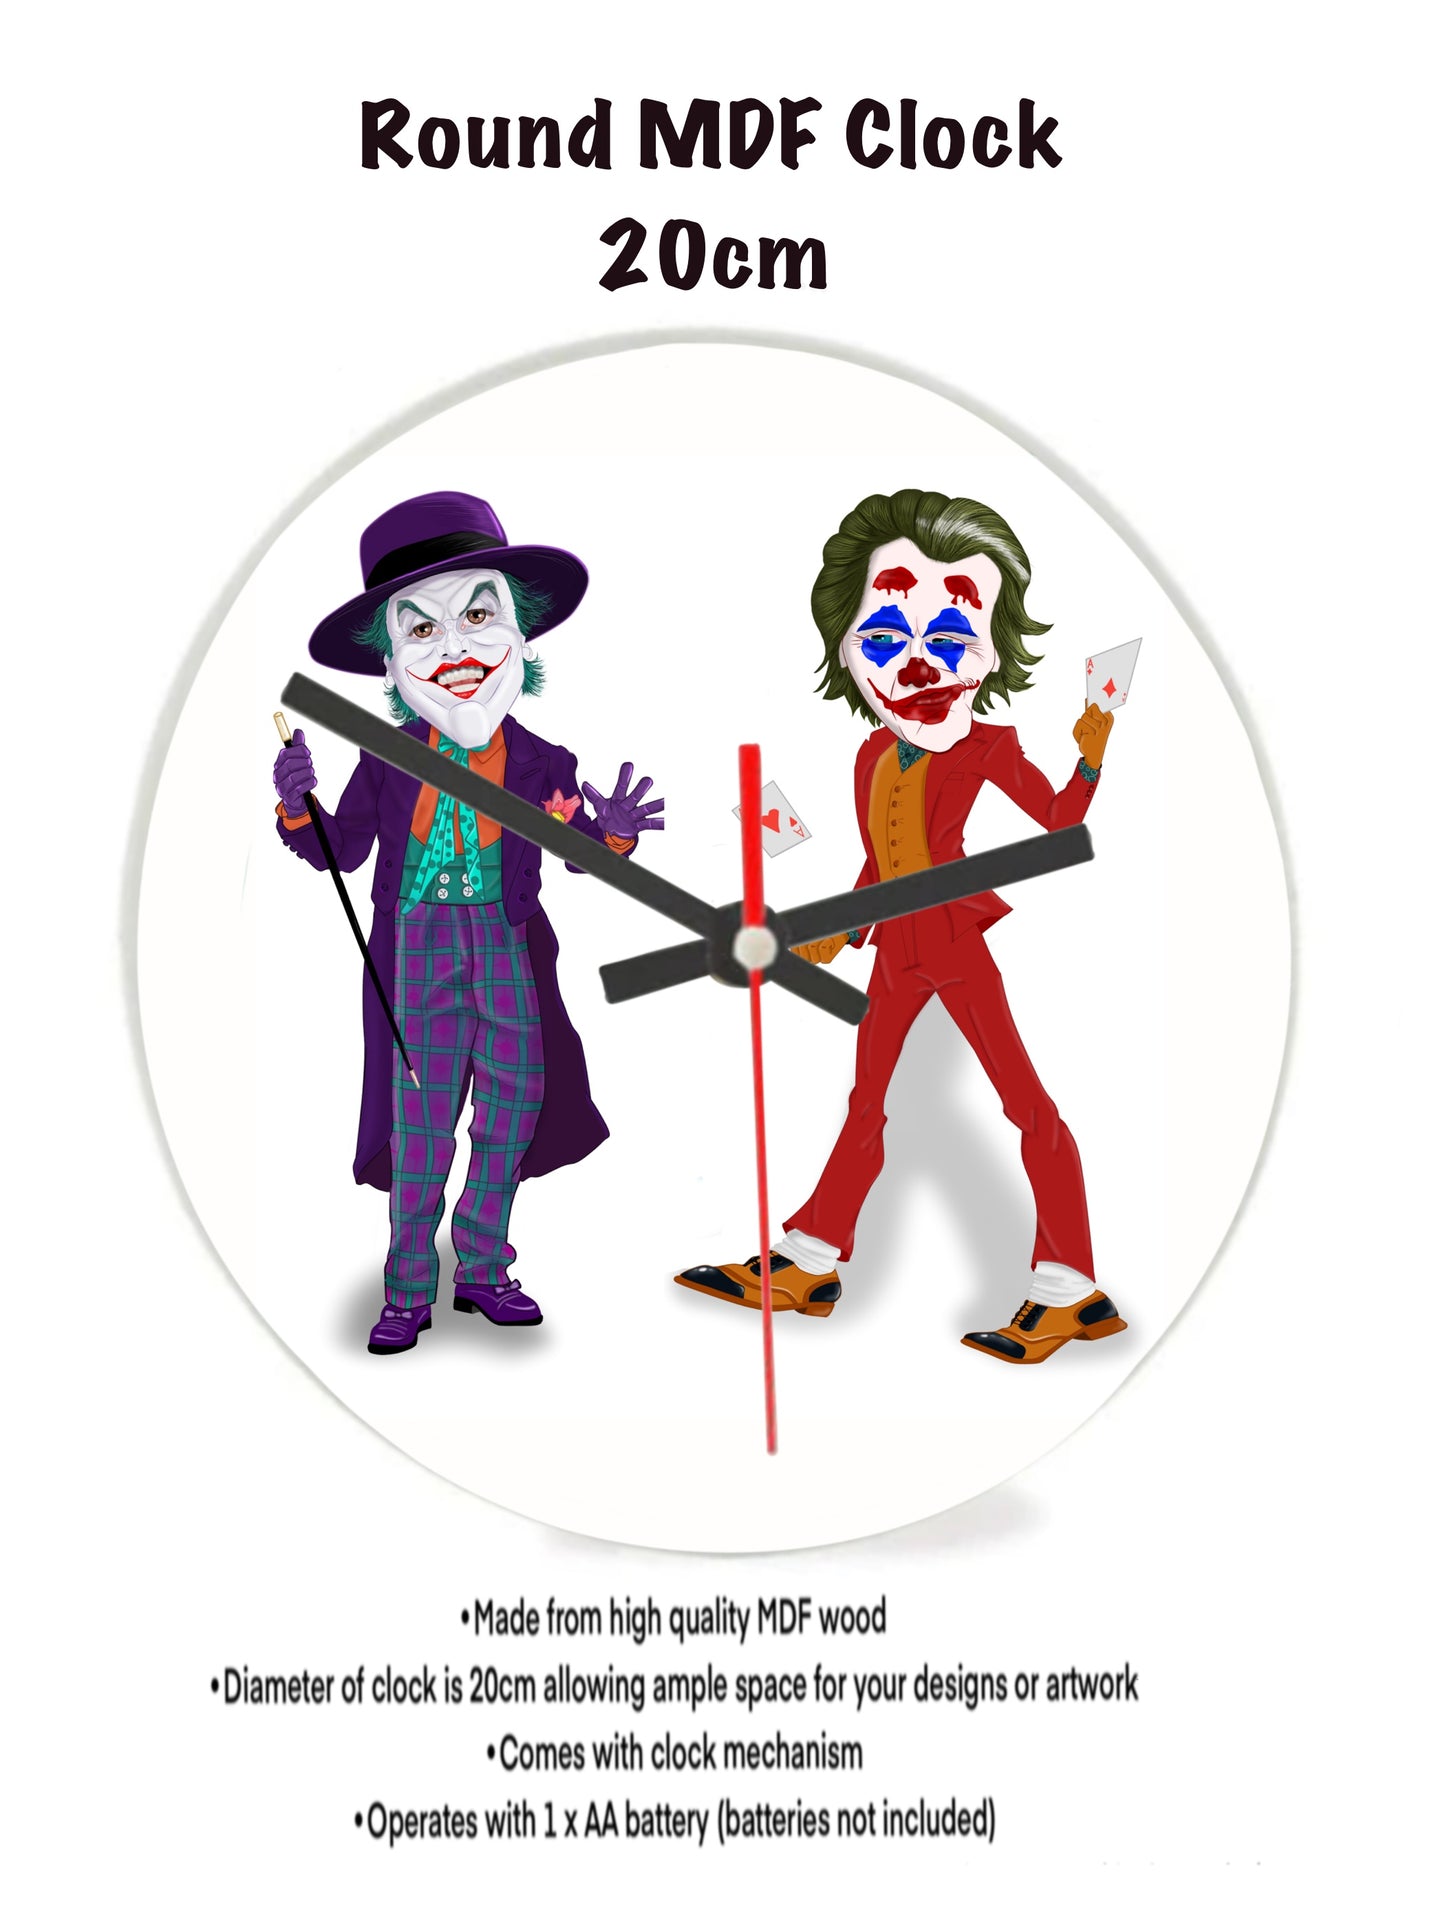 2 Jokers on a Clocks-Clocks #batman #joker #caricatures